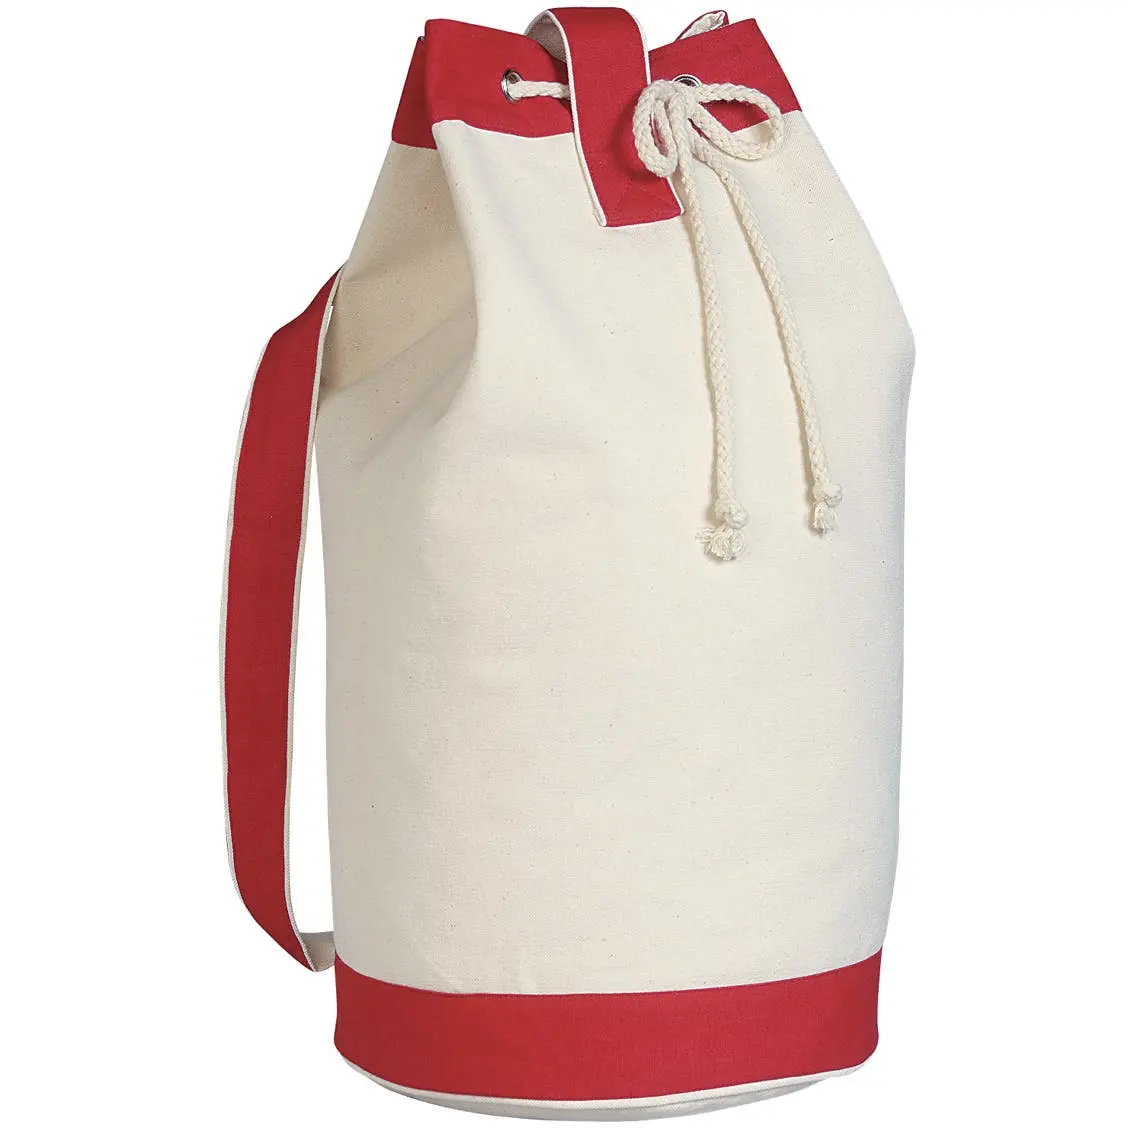 Canvas Bag Draw string Bucket Backpack Multifunktion ale Seemann-Reise rucksack mit großer Kapazität